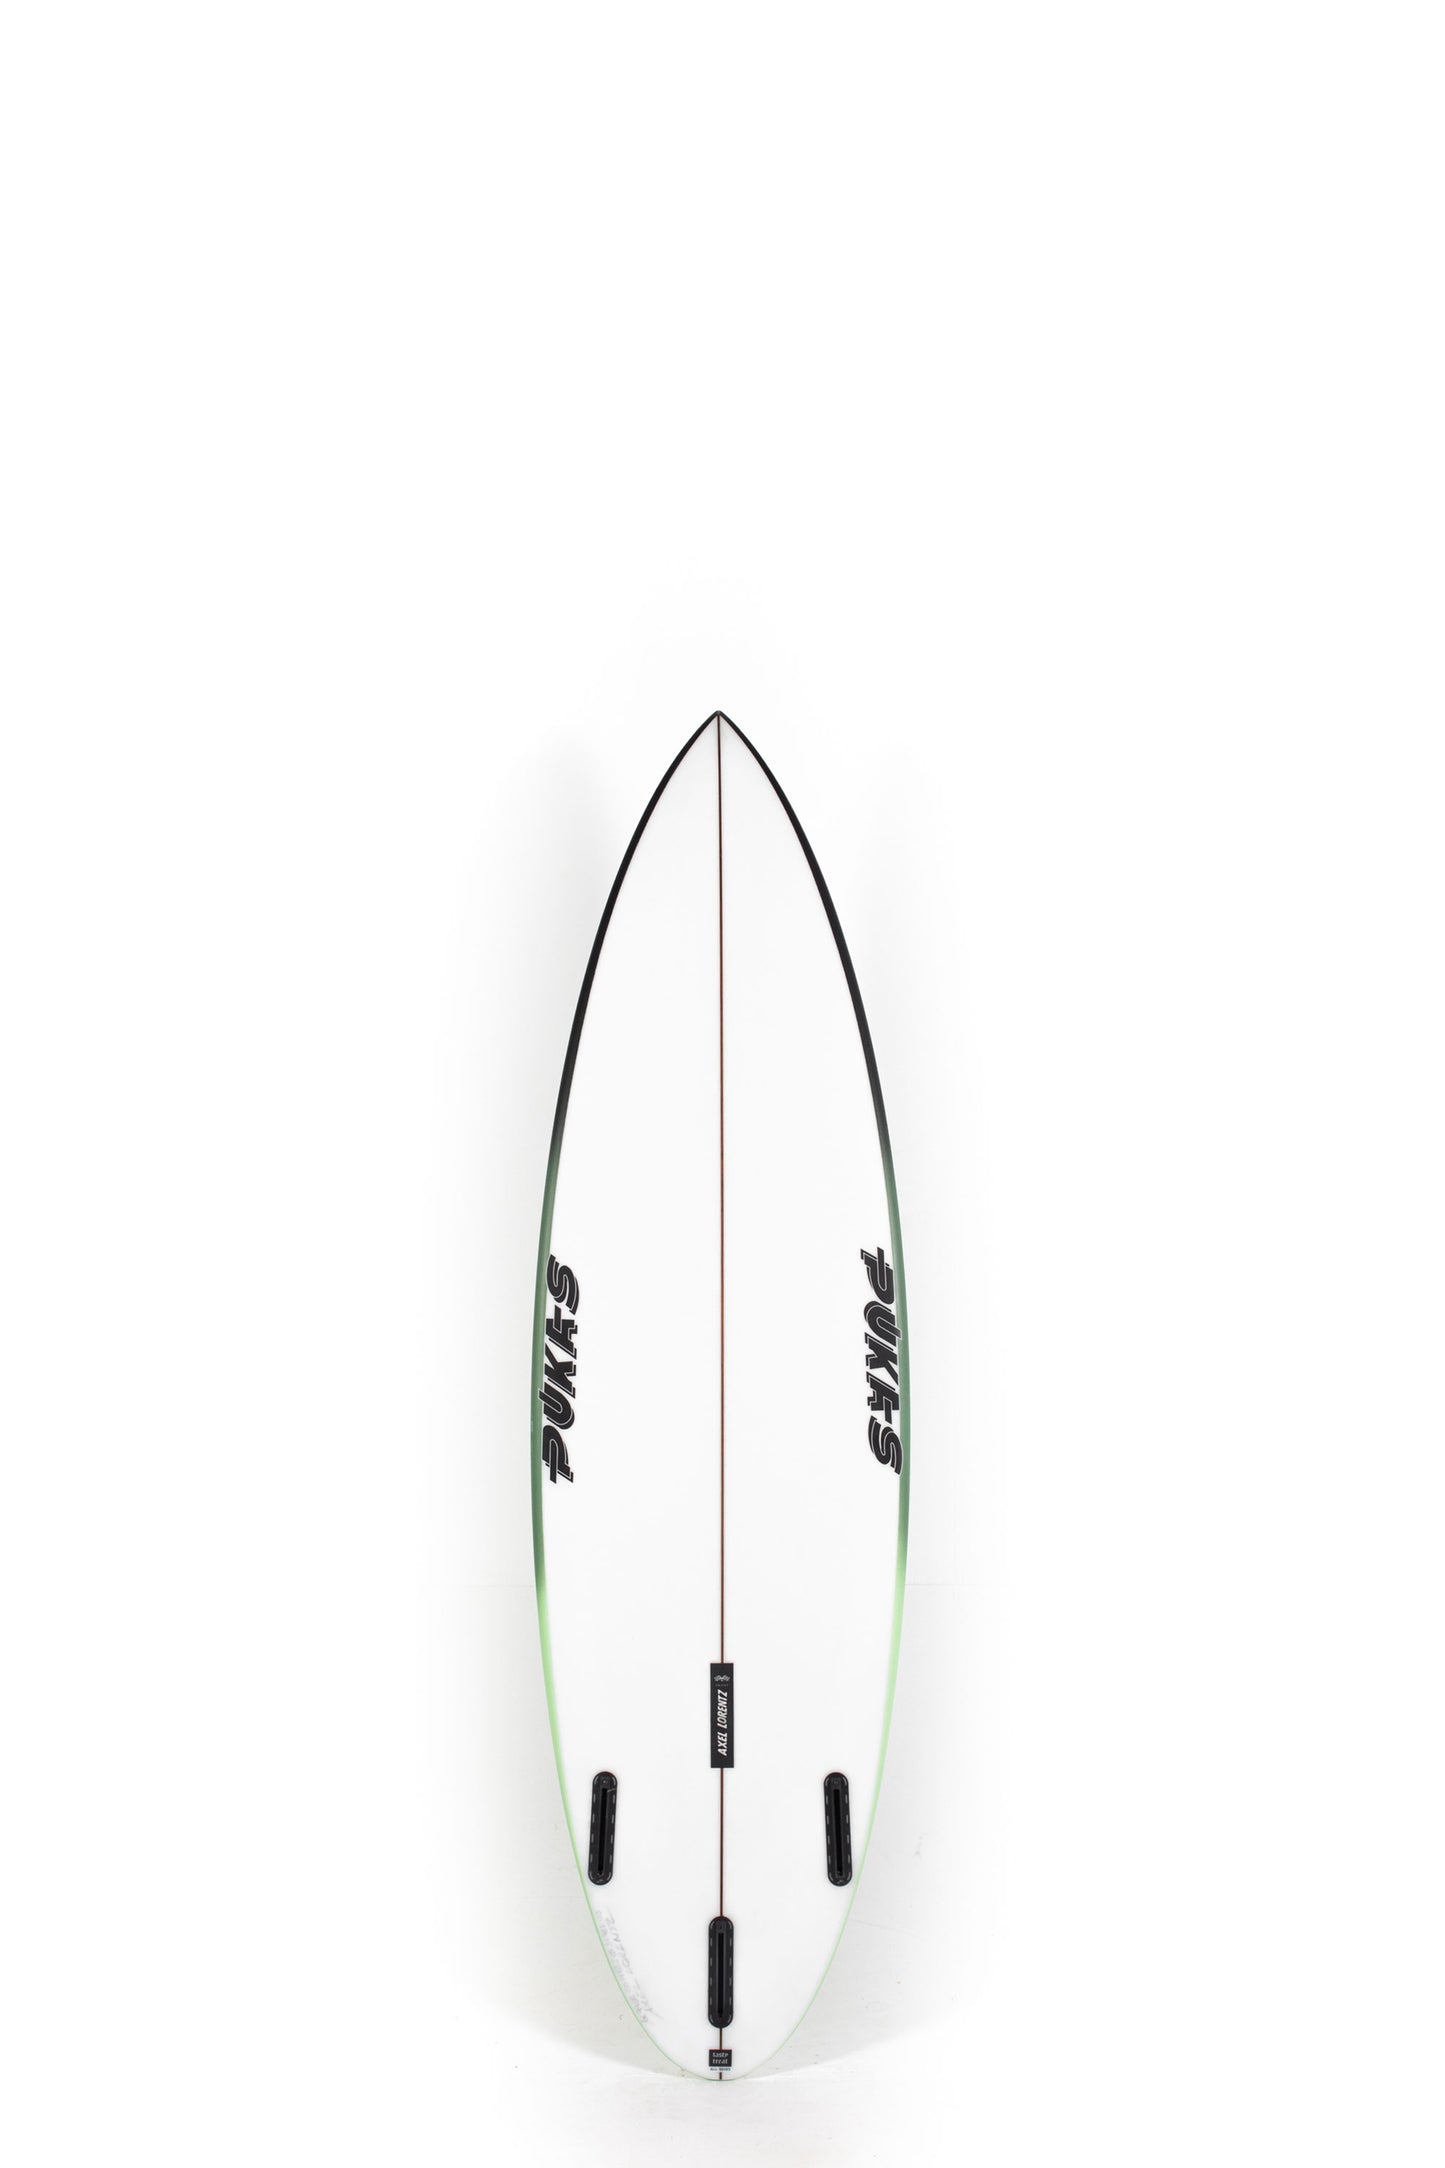 Pukas Surf Shop - Pukas Surfboard - TASTY TREAT ALL ROUND by Axel Lorentz - 6'0" x 19.63 x 2.55 x 31.96L - AX09966